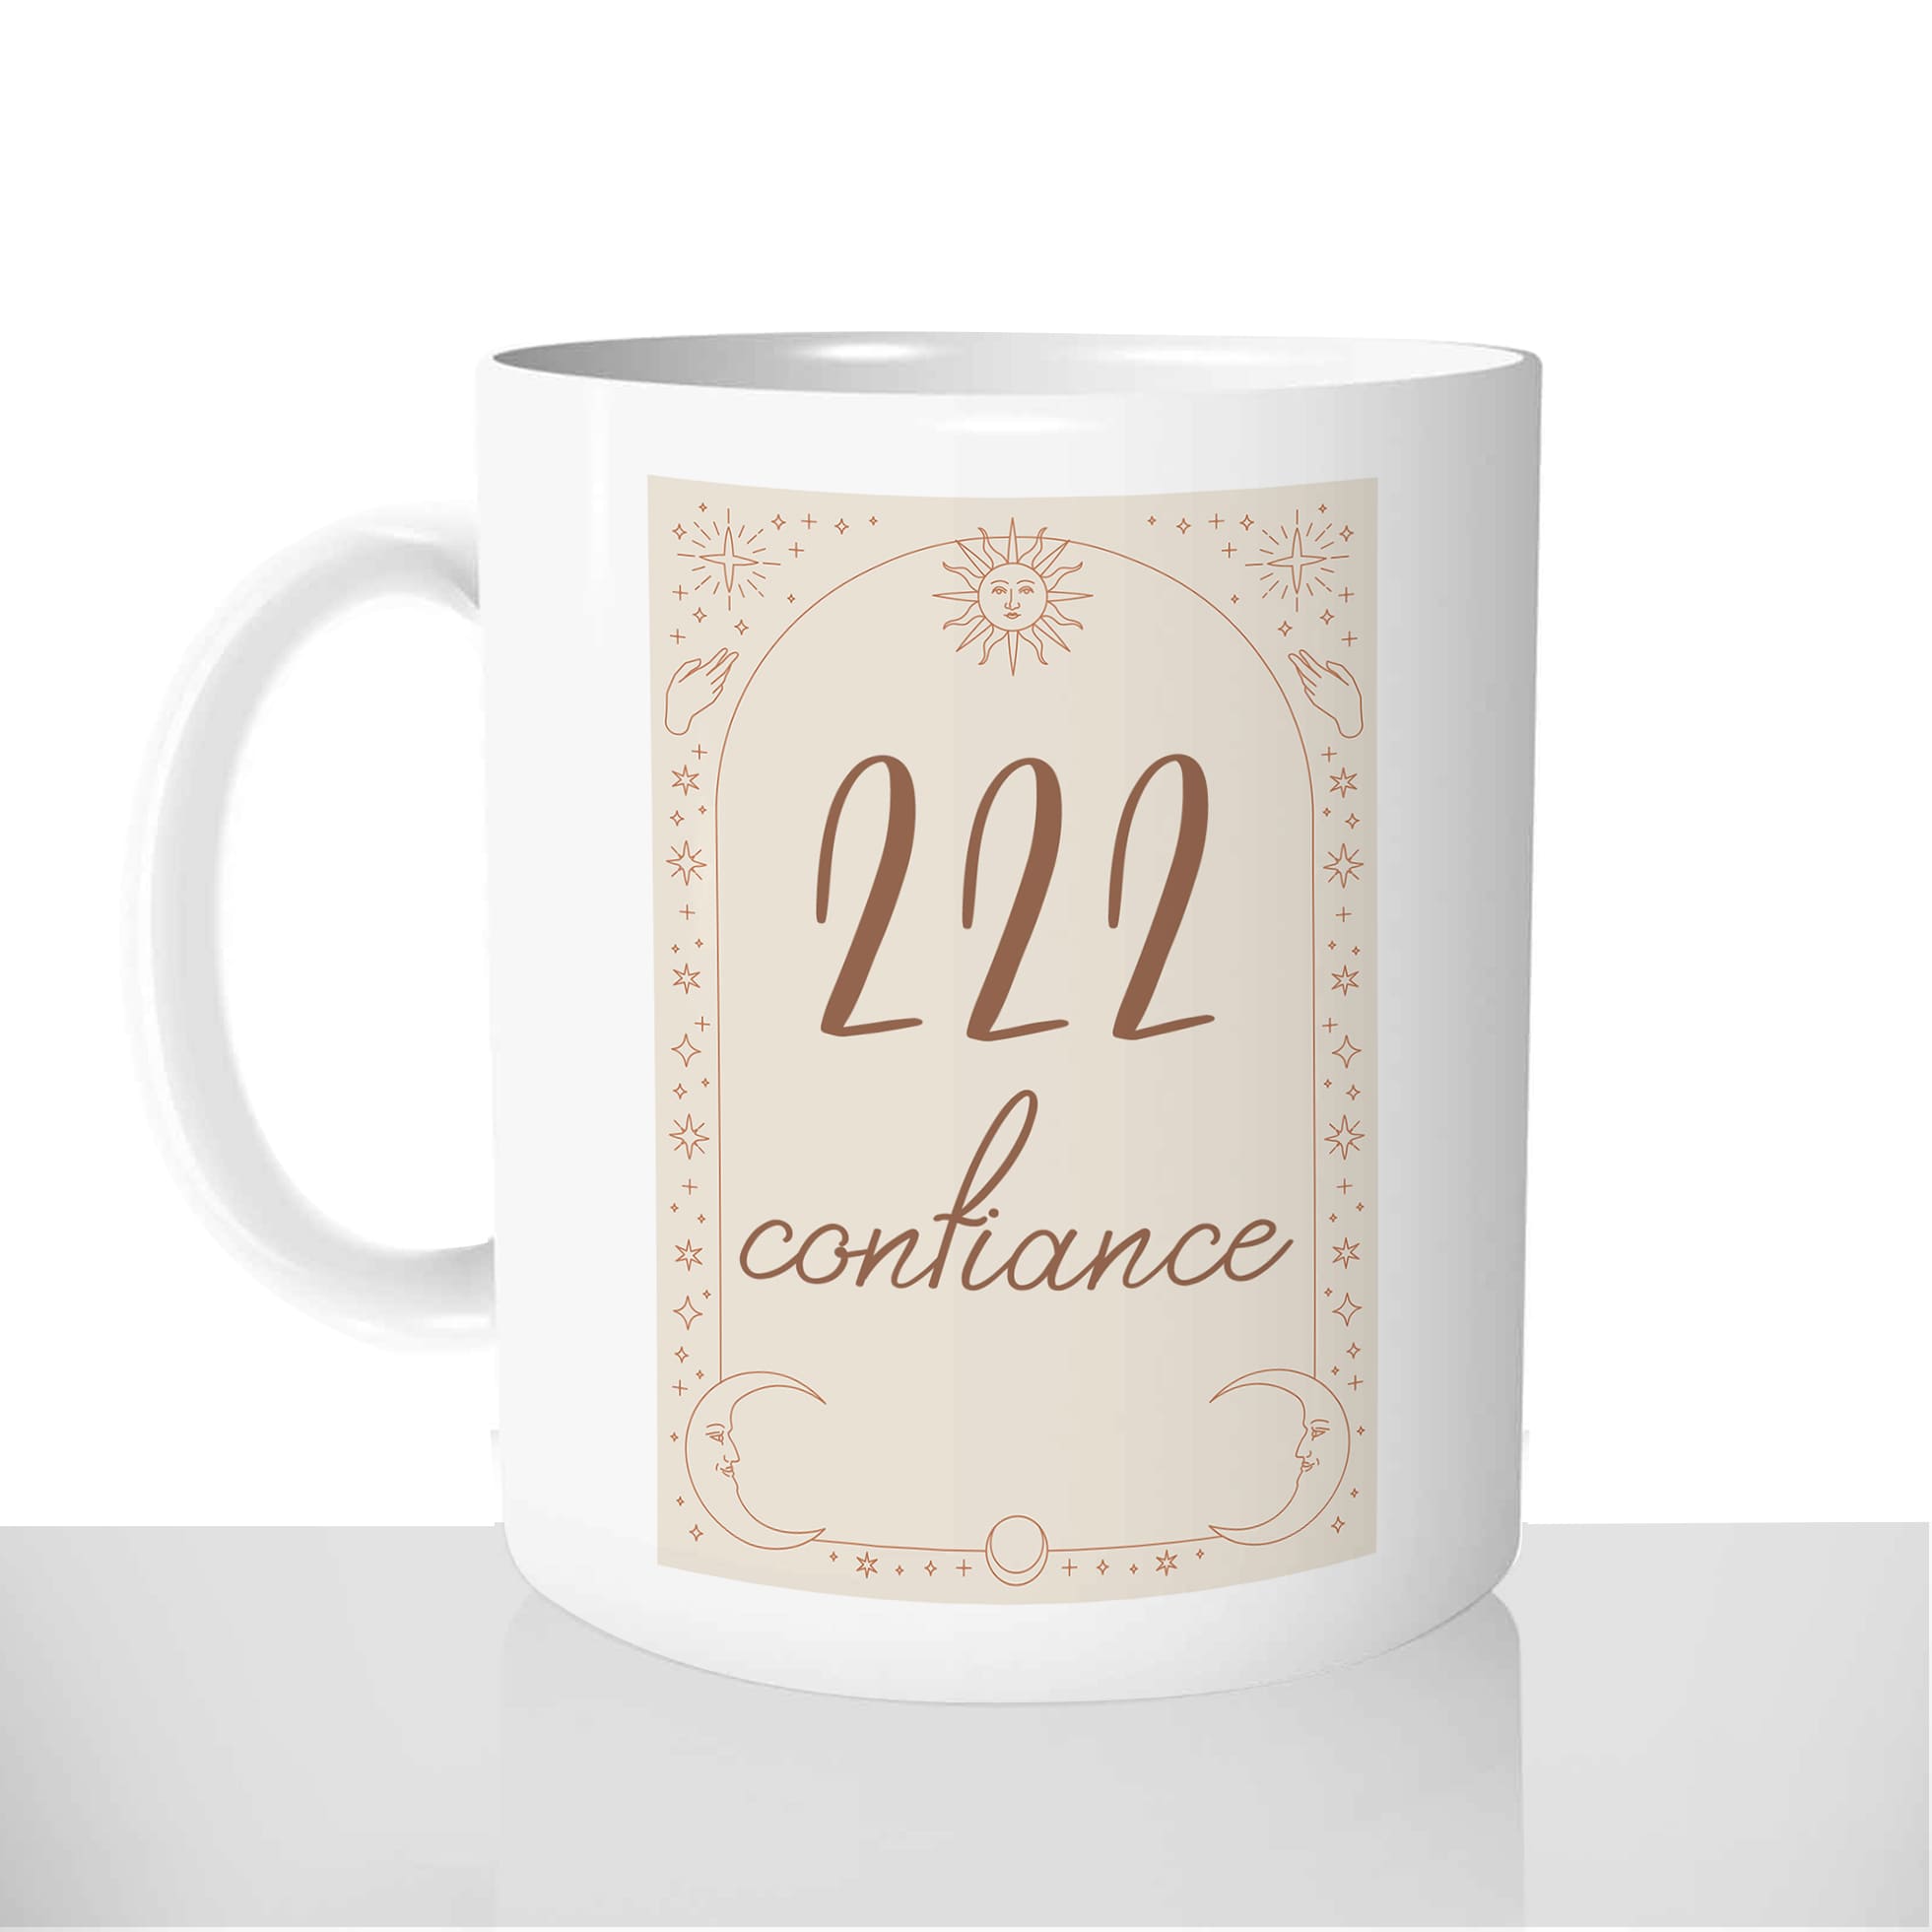 mug-blanc-céramique-11oz-france-mugs-surprise-pas-cher-numéro-des-anges-222-angel-ciel-étoiles-idée-cadeau-boho-original